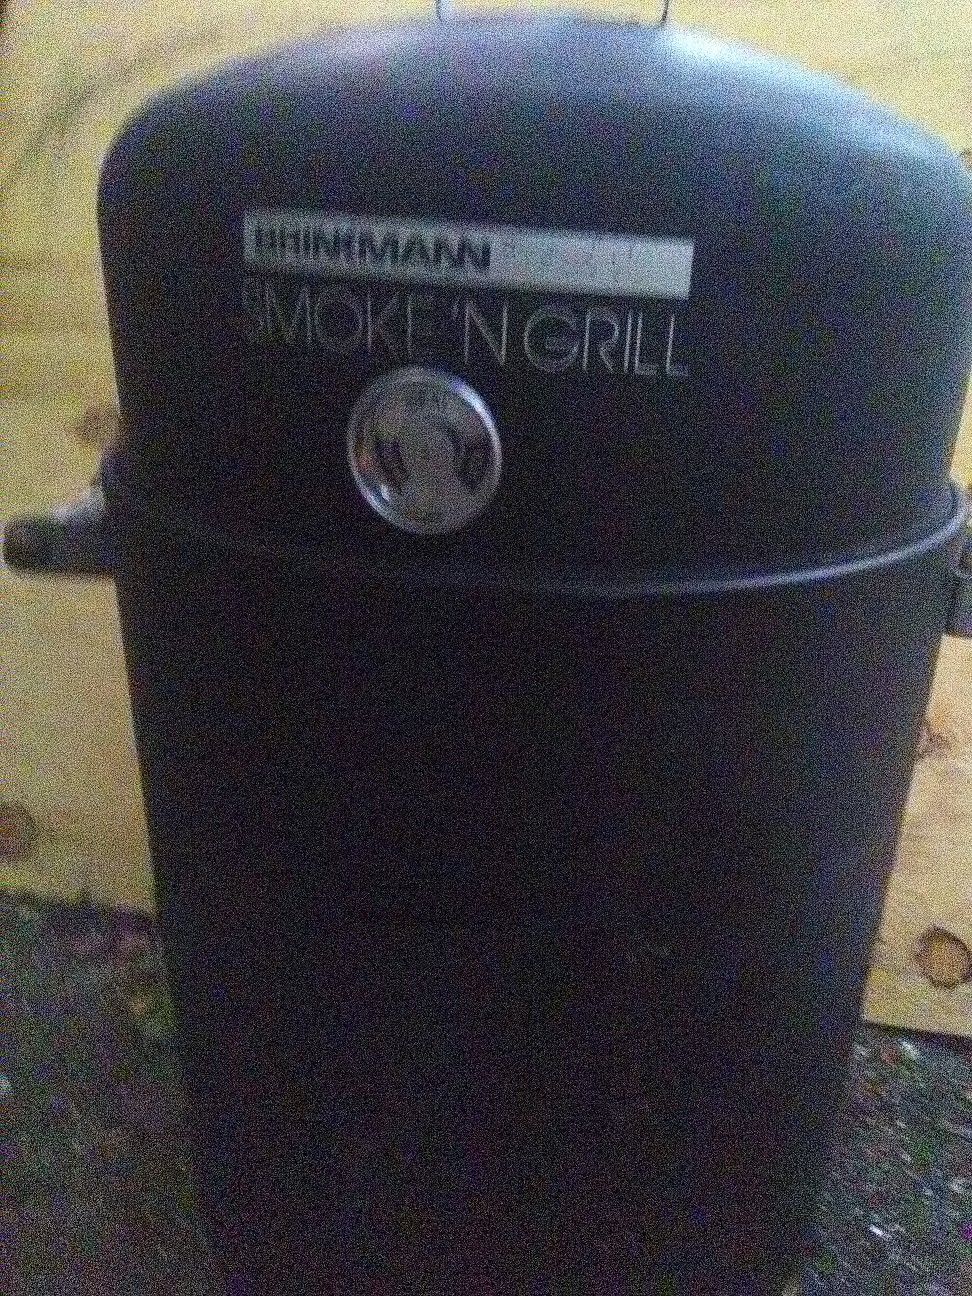 BBQ smoke and grill Brinkmann